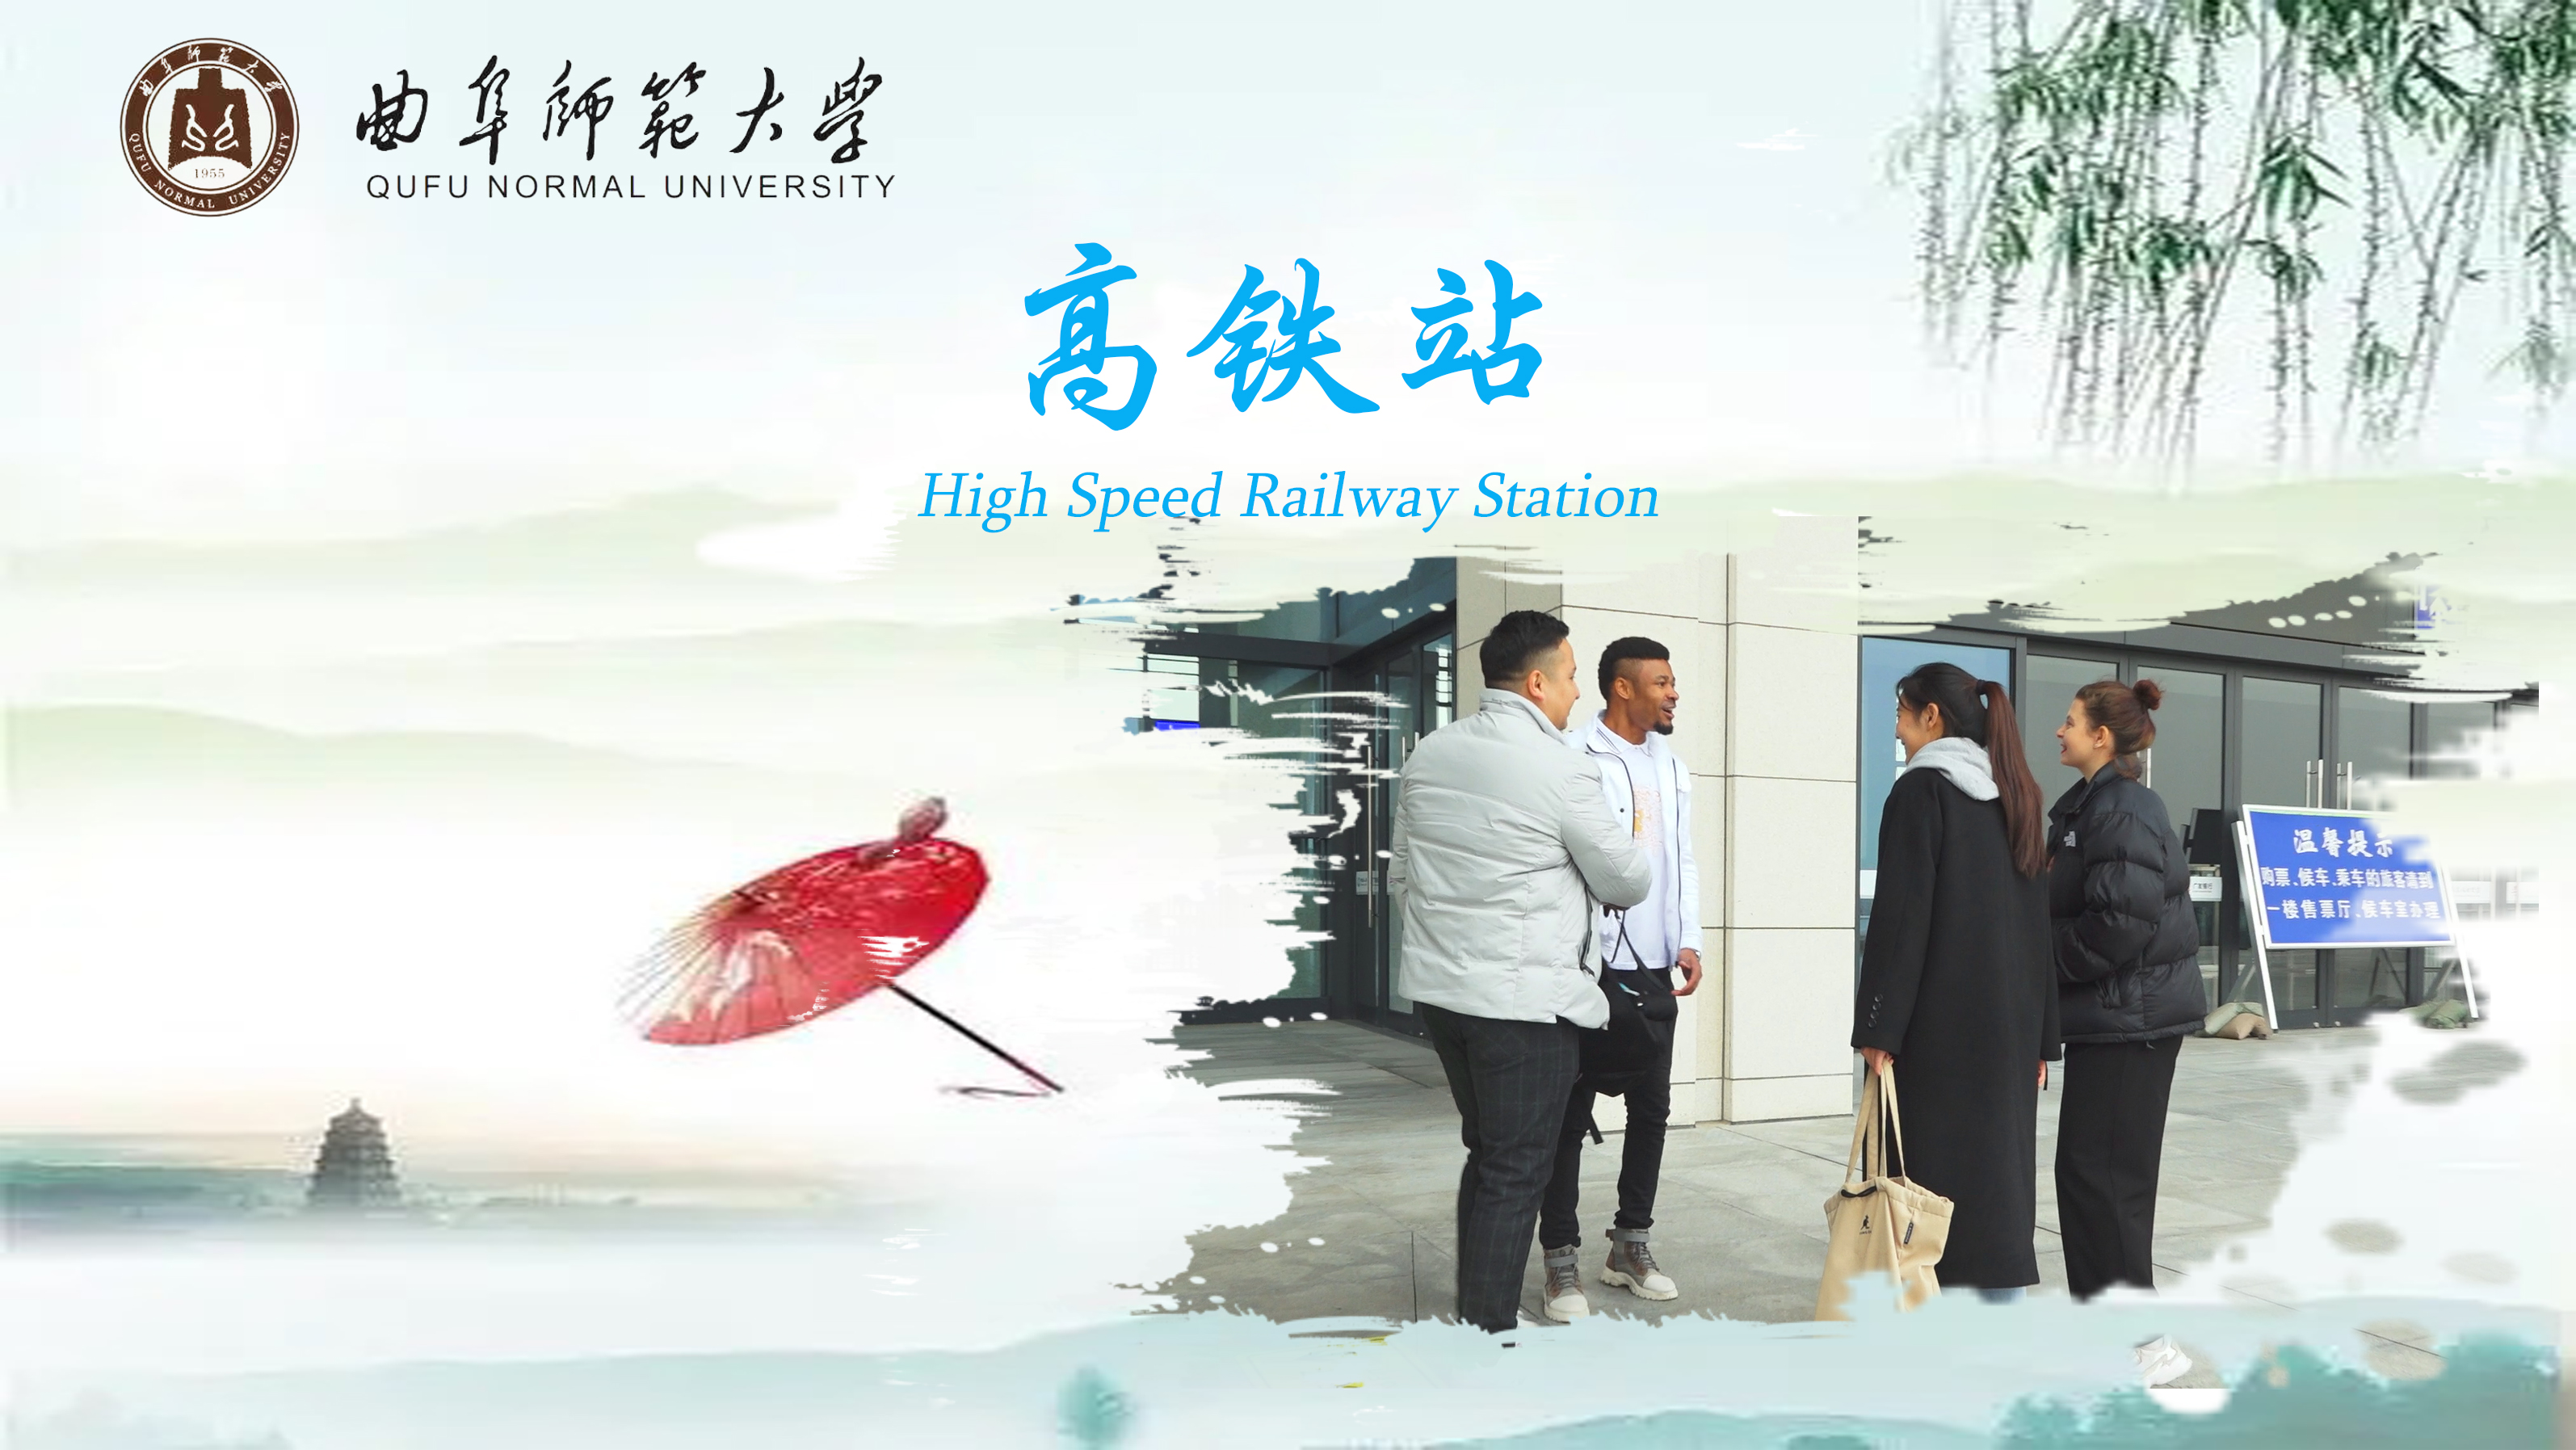 High Speed Railway Station